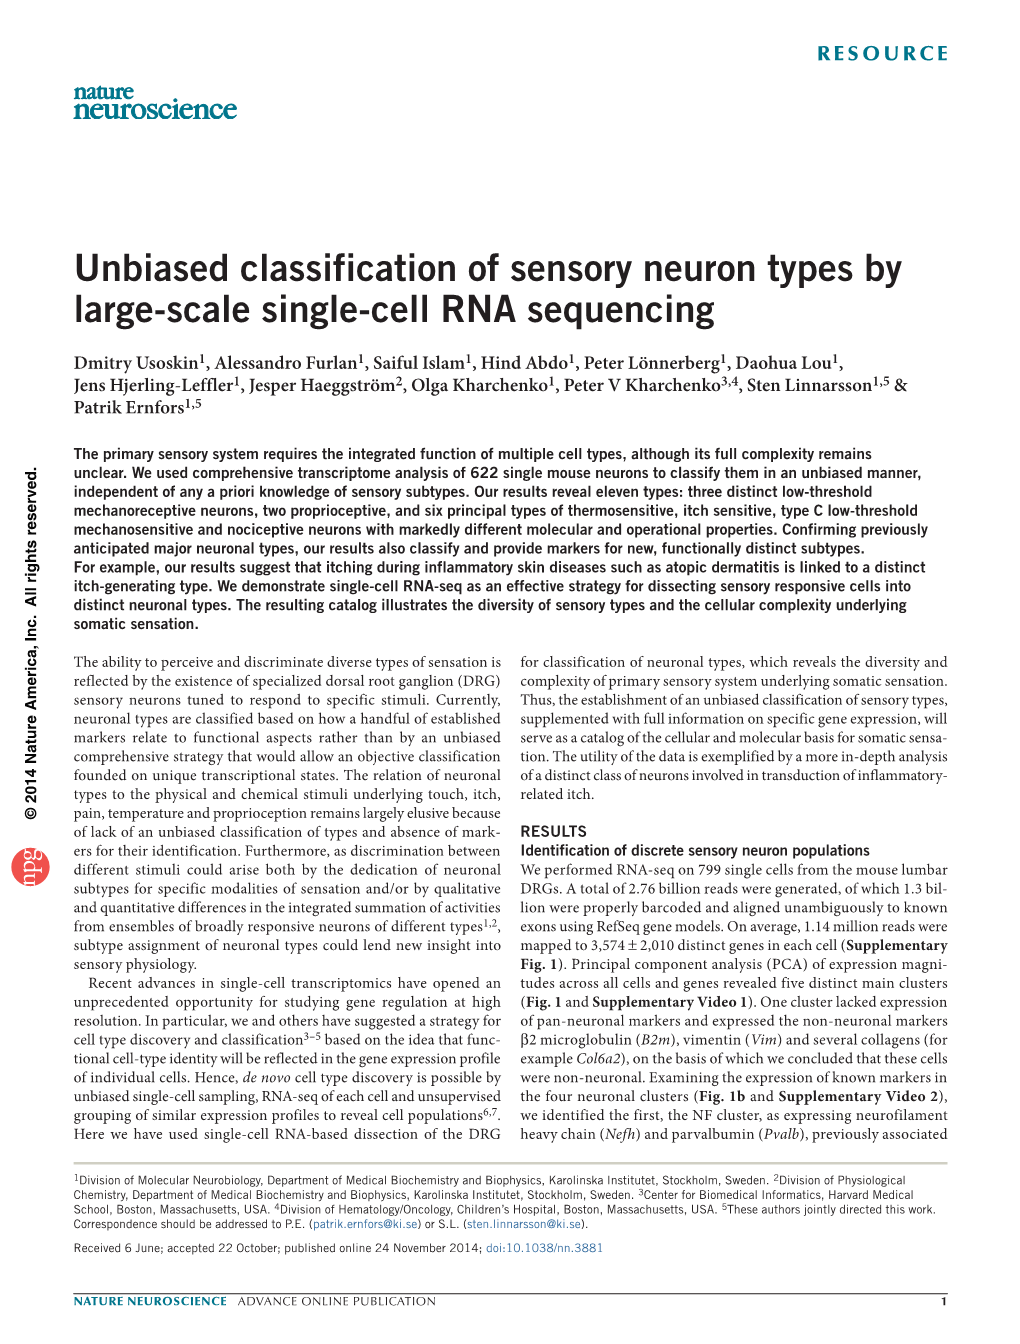 Unbiased Classification of Sensory Neuron Types by Large-Scale Single